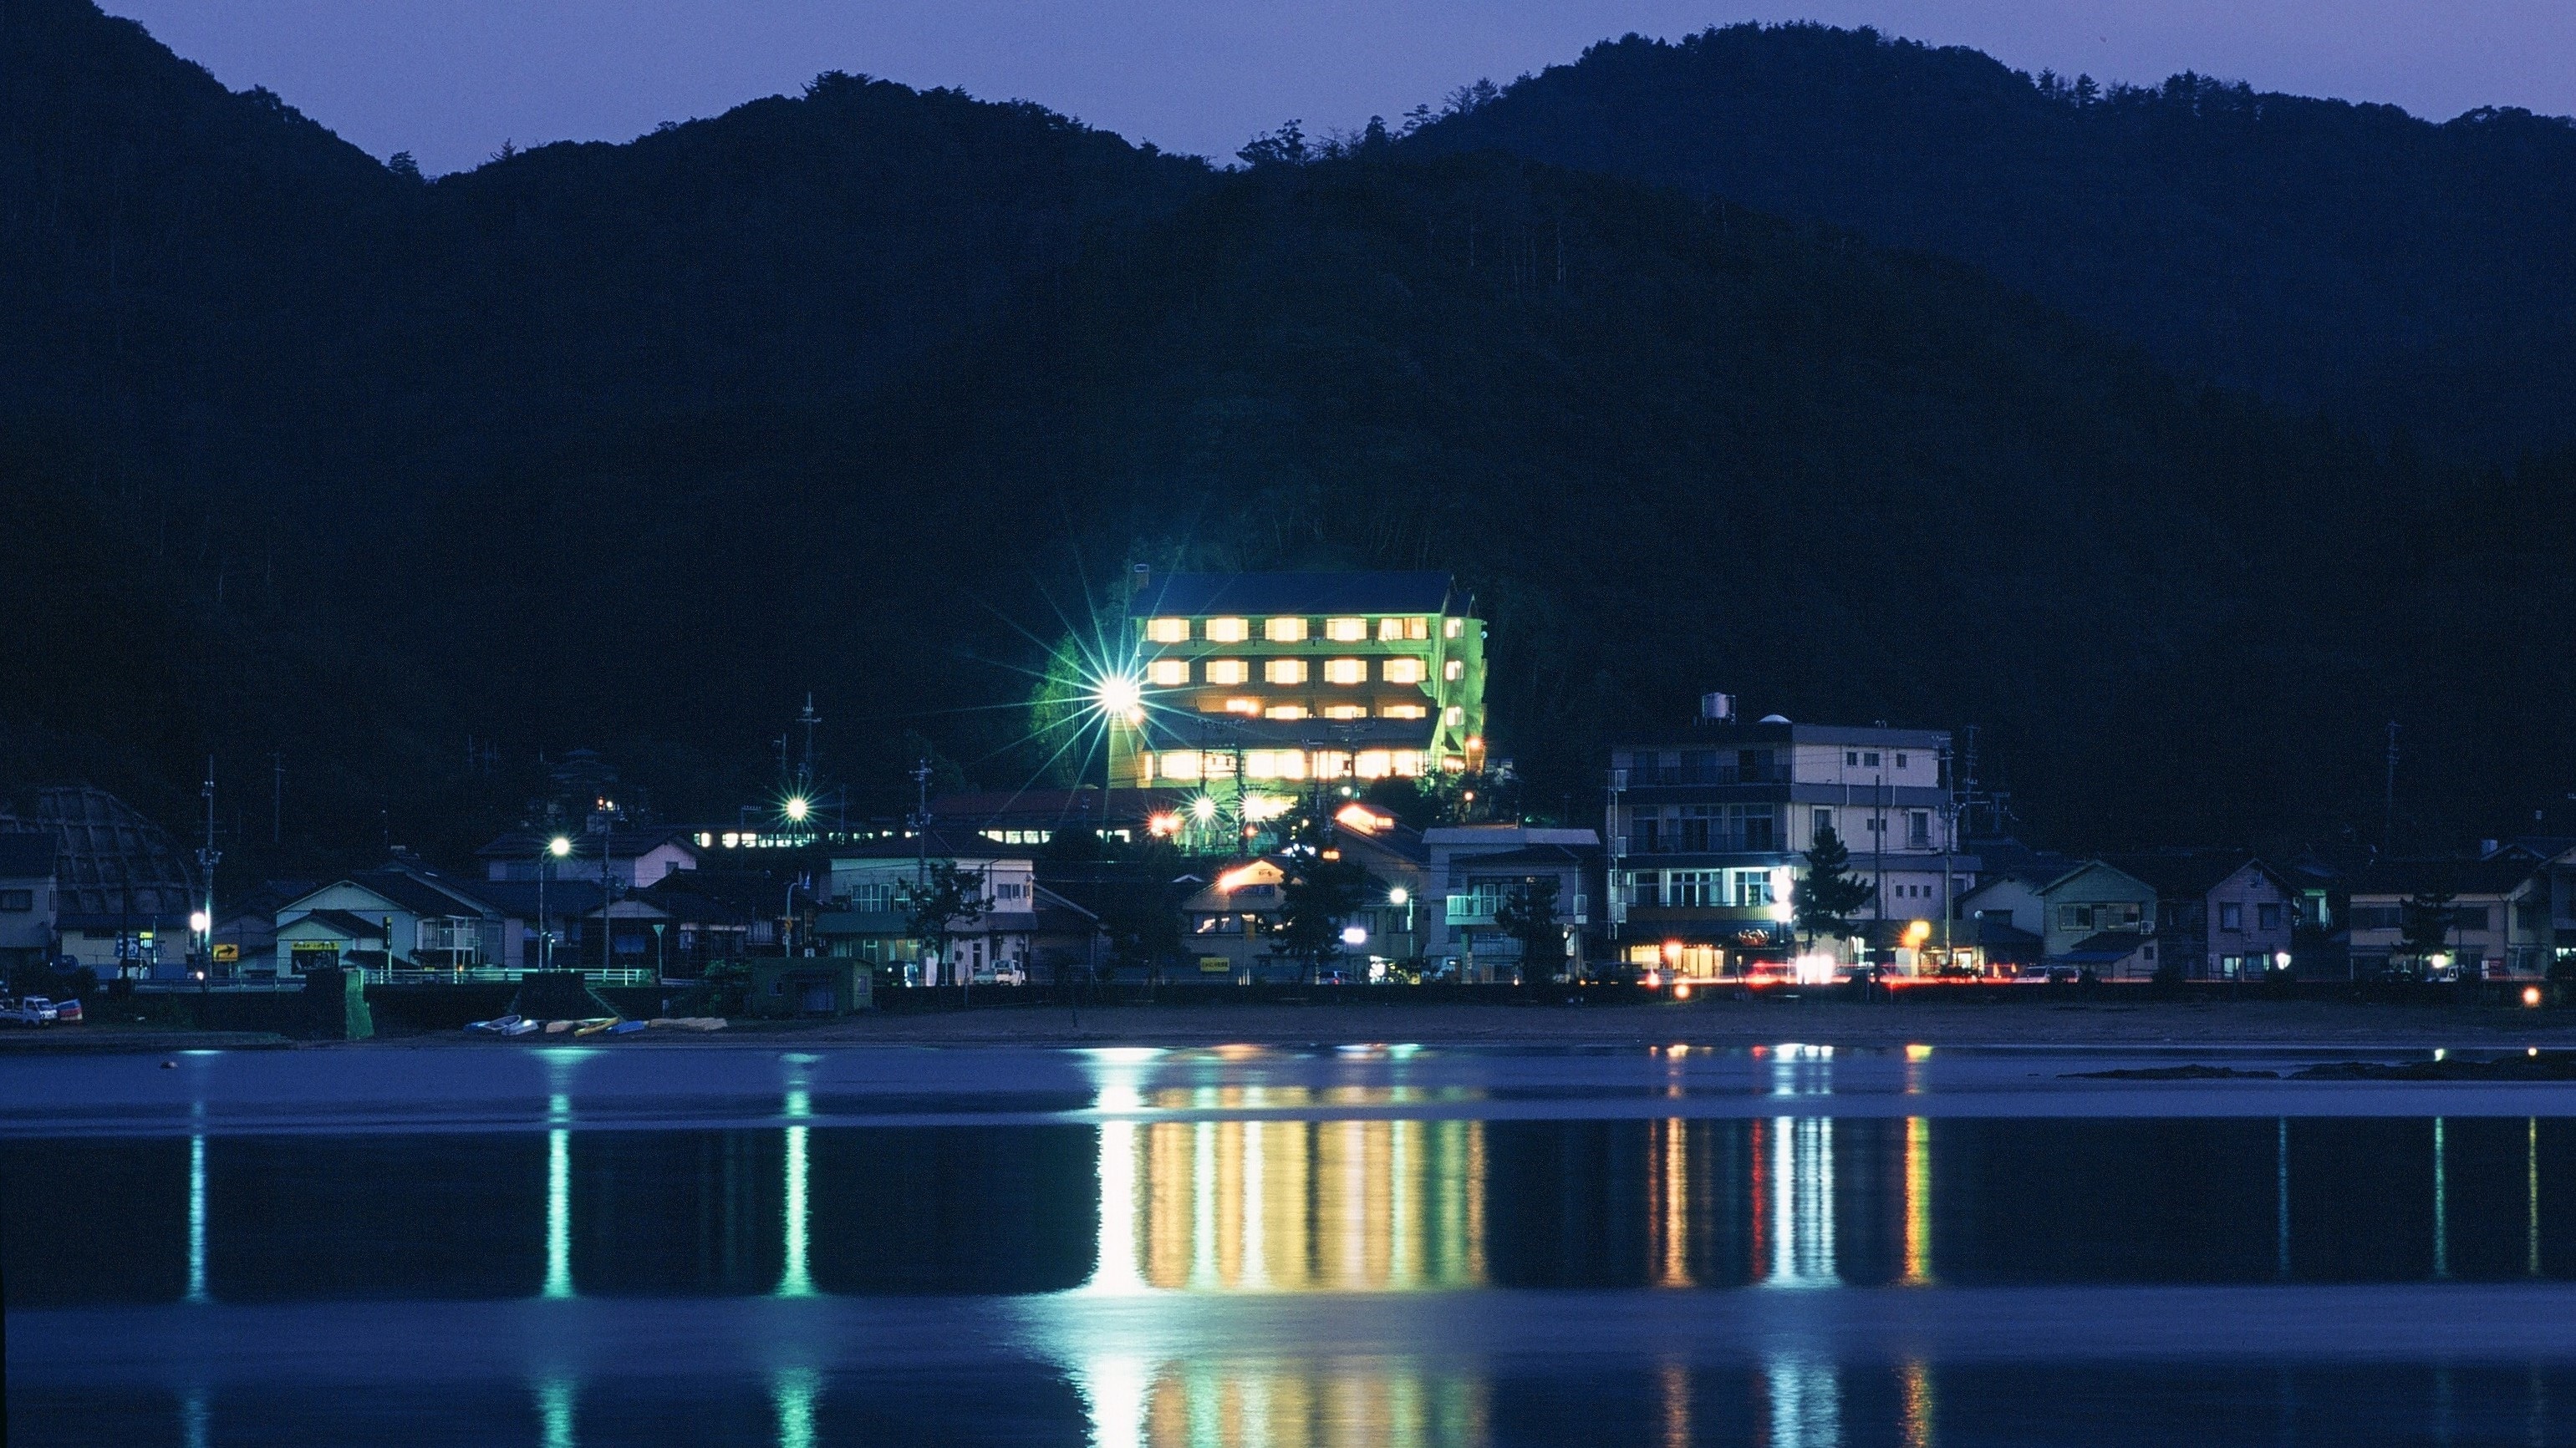 "Karagi" is located on the mountainside overlooking Shibayama Bay